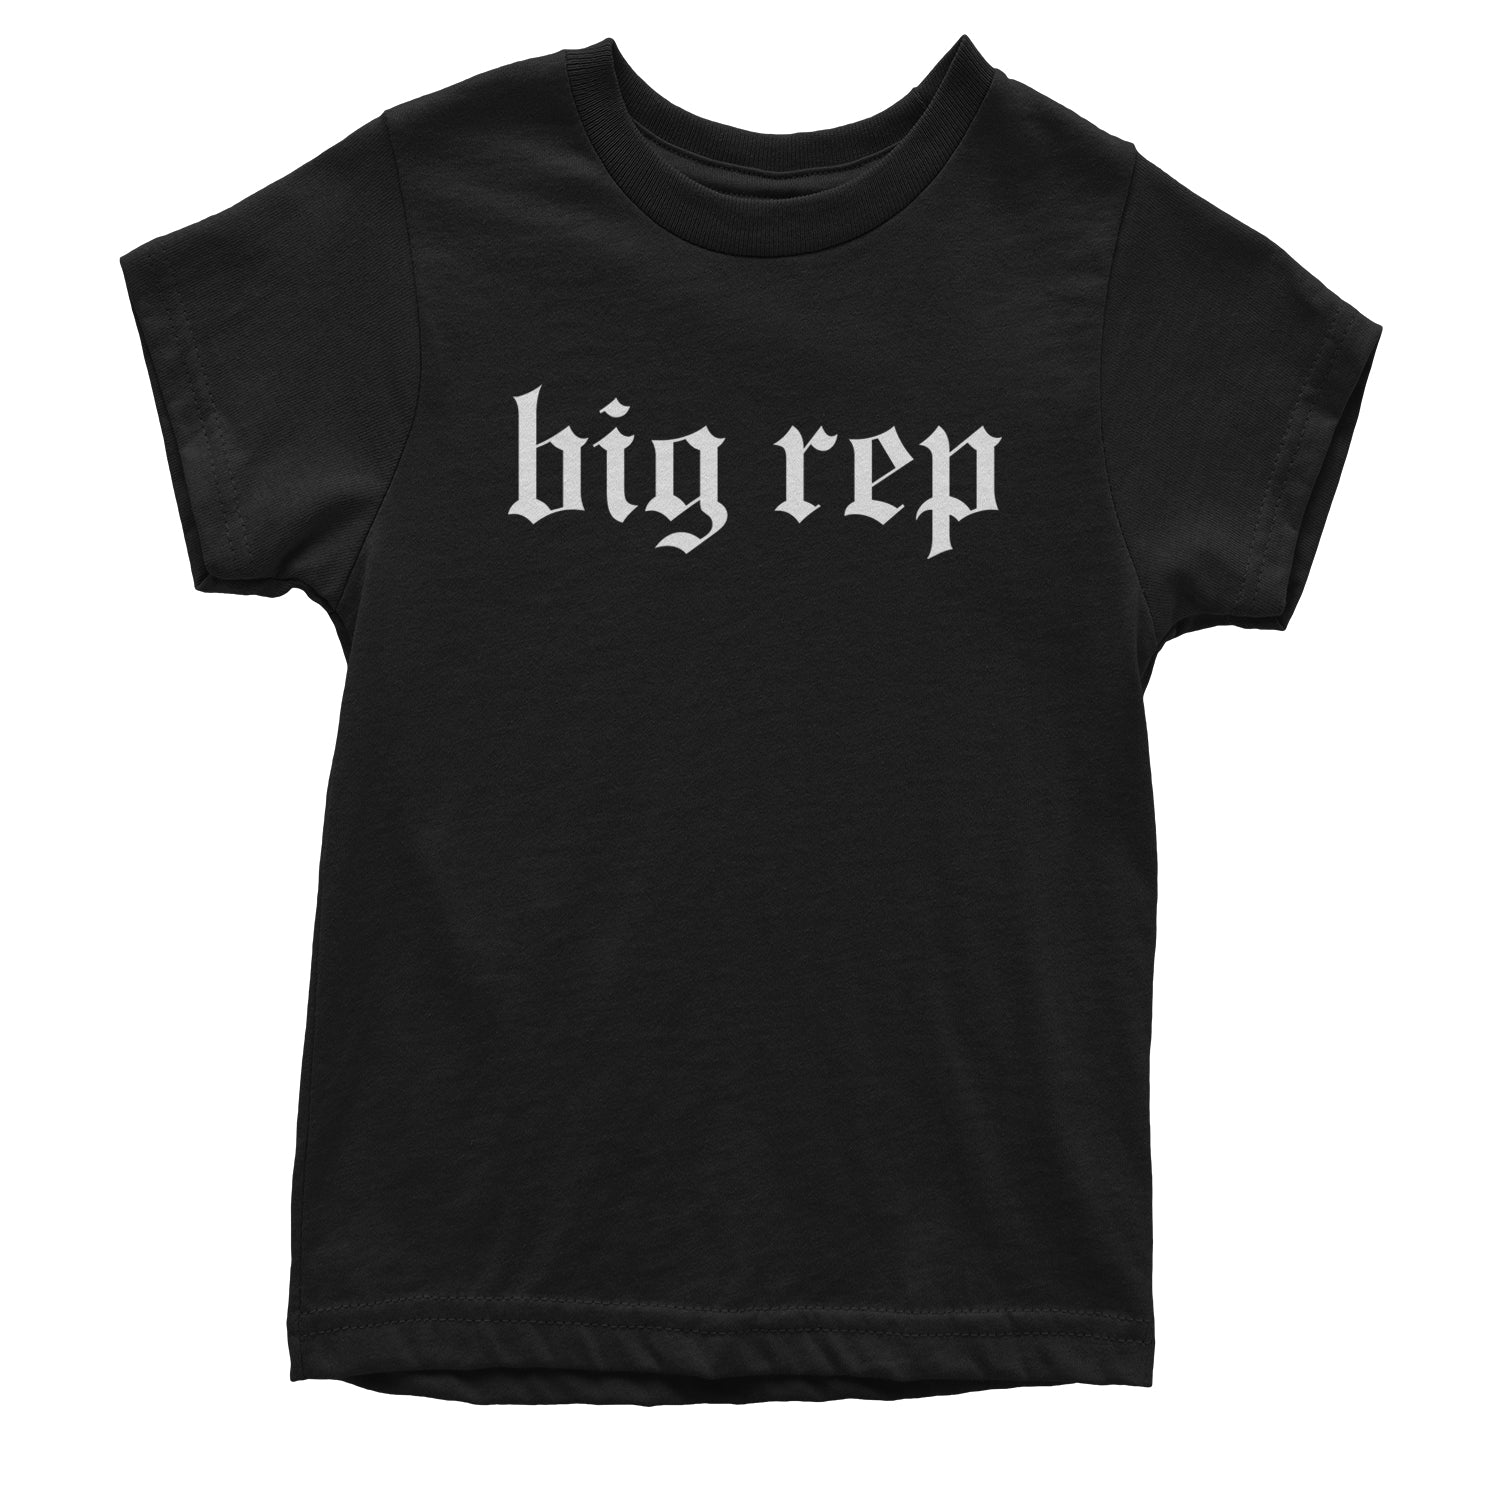 Big Rep Reputation Youth T-shirt